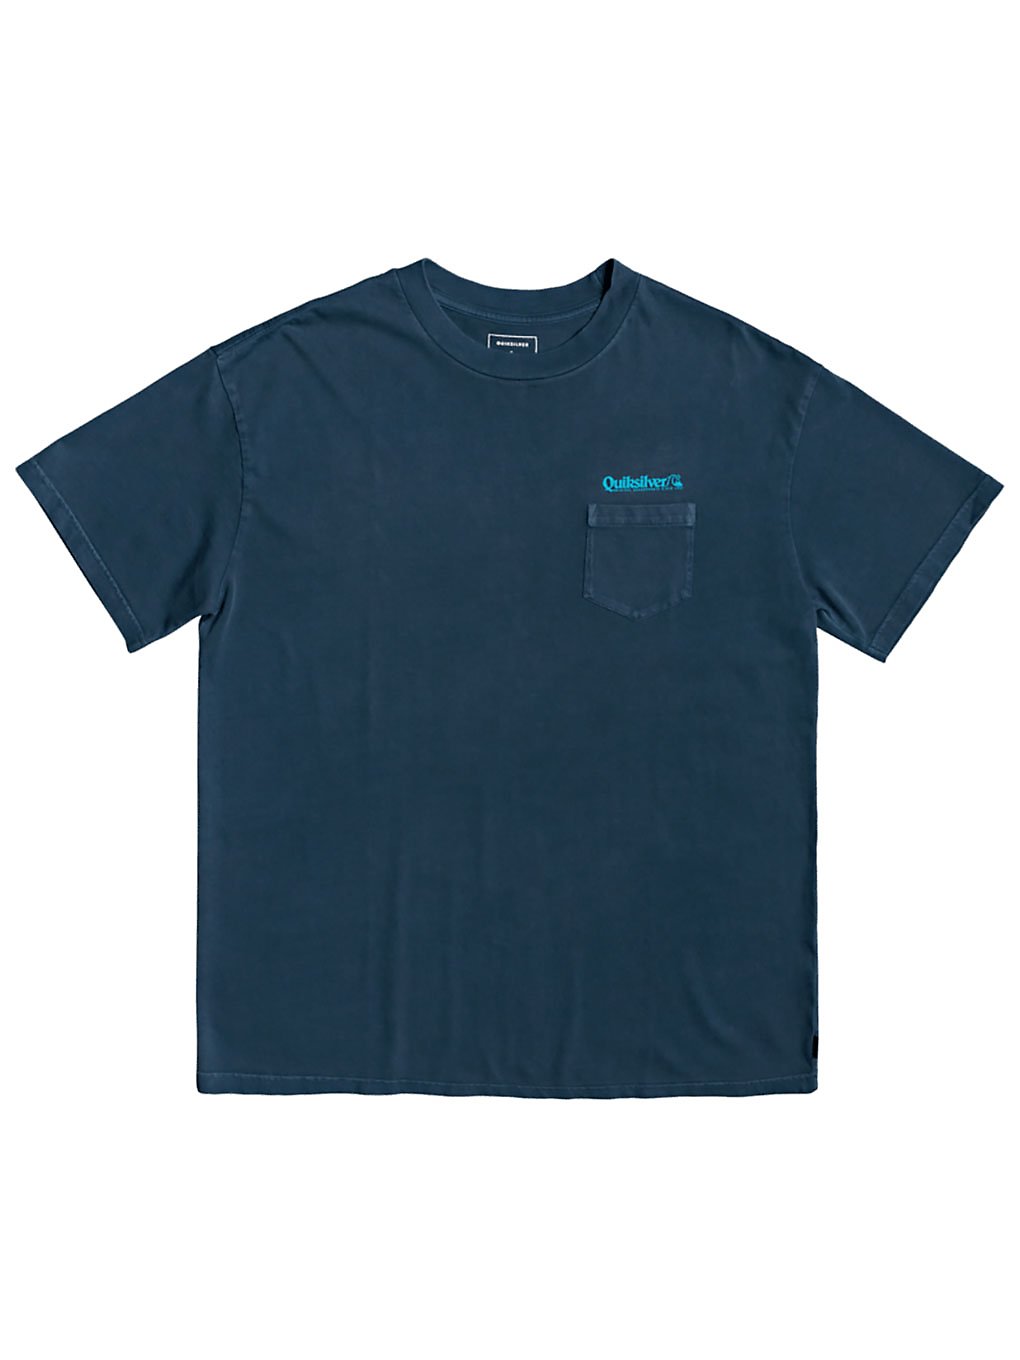 Quiksilver Lost Fire T-Shirt majolica blue